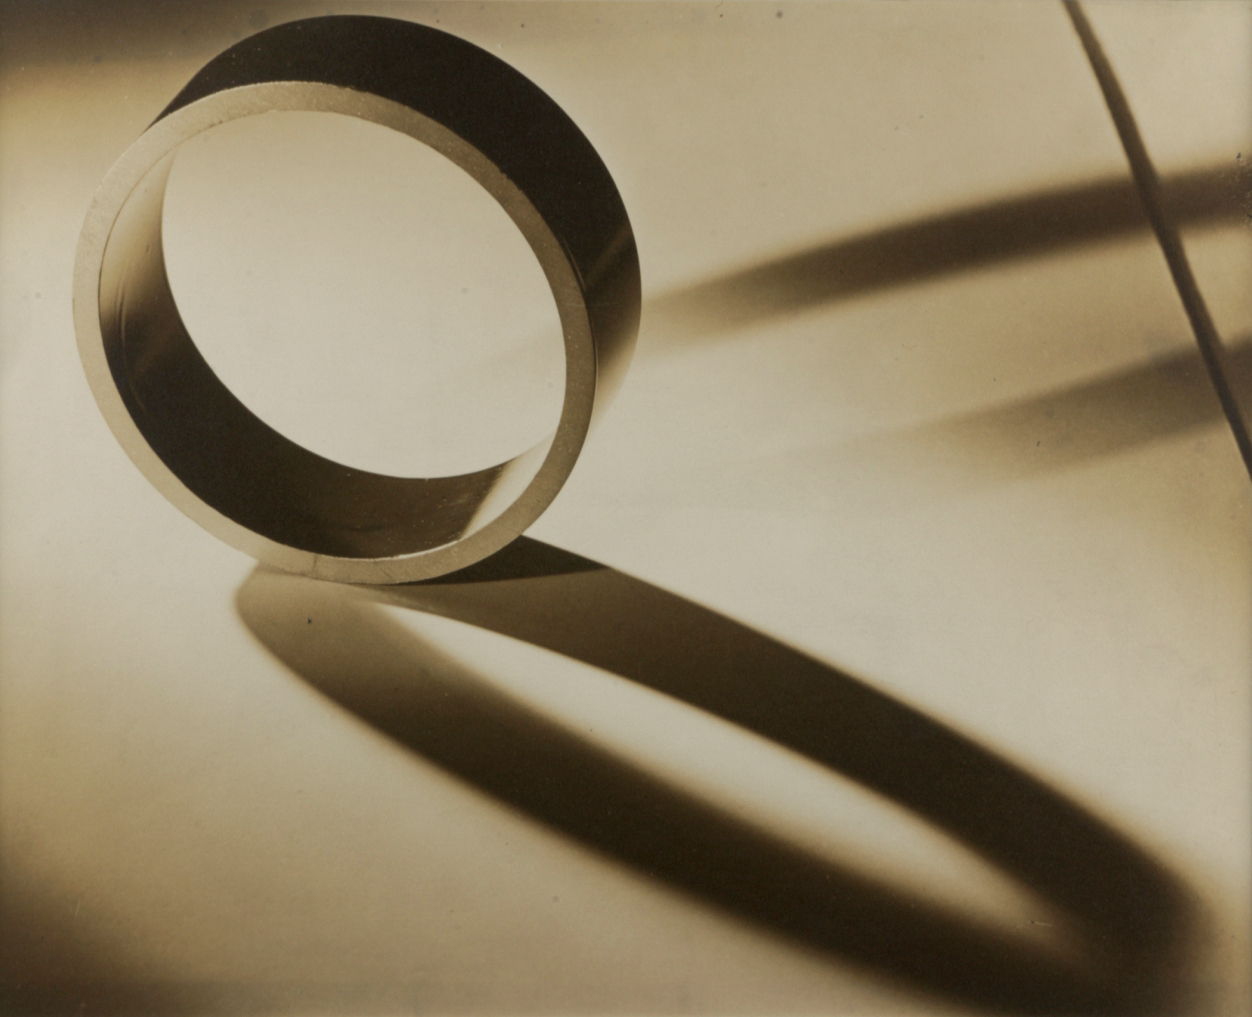 Metal ring and shadows by Luke Swank